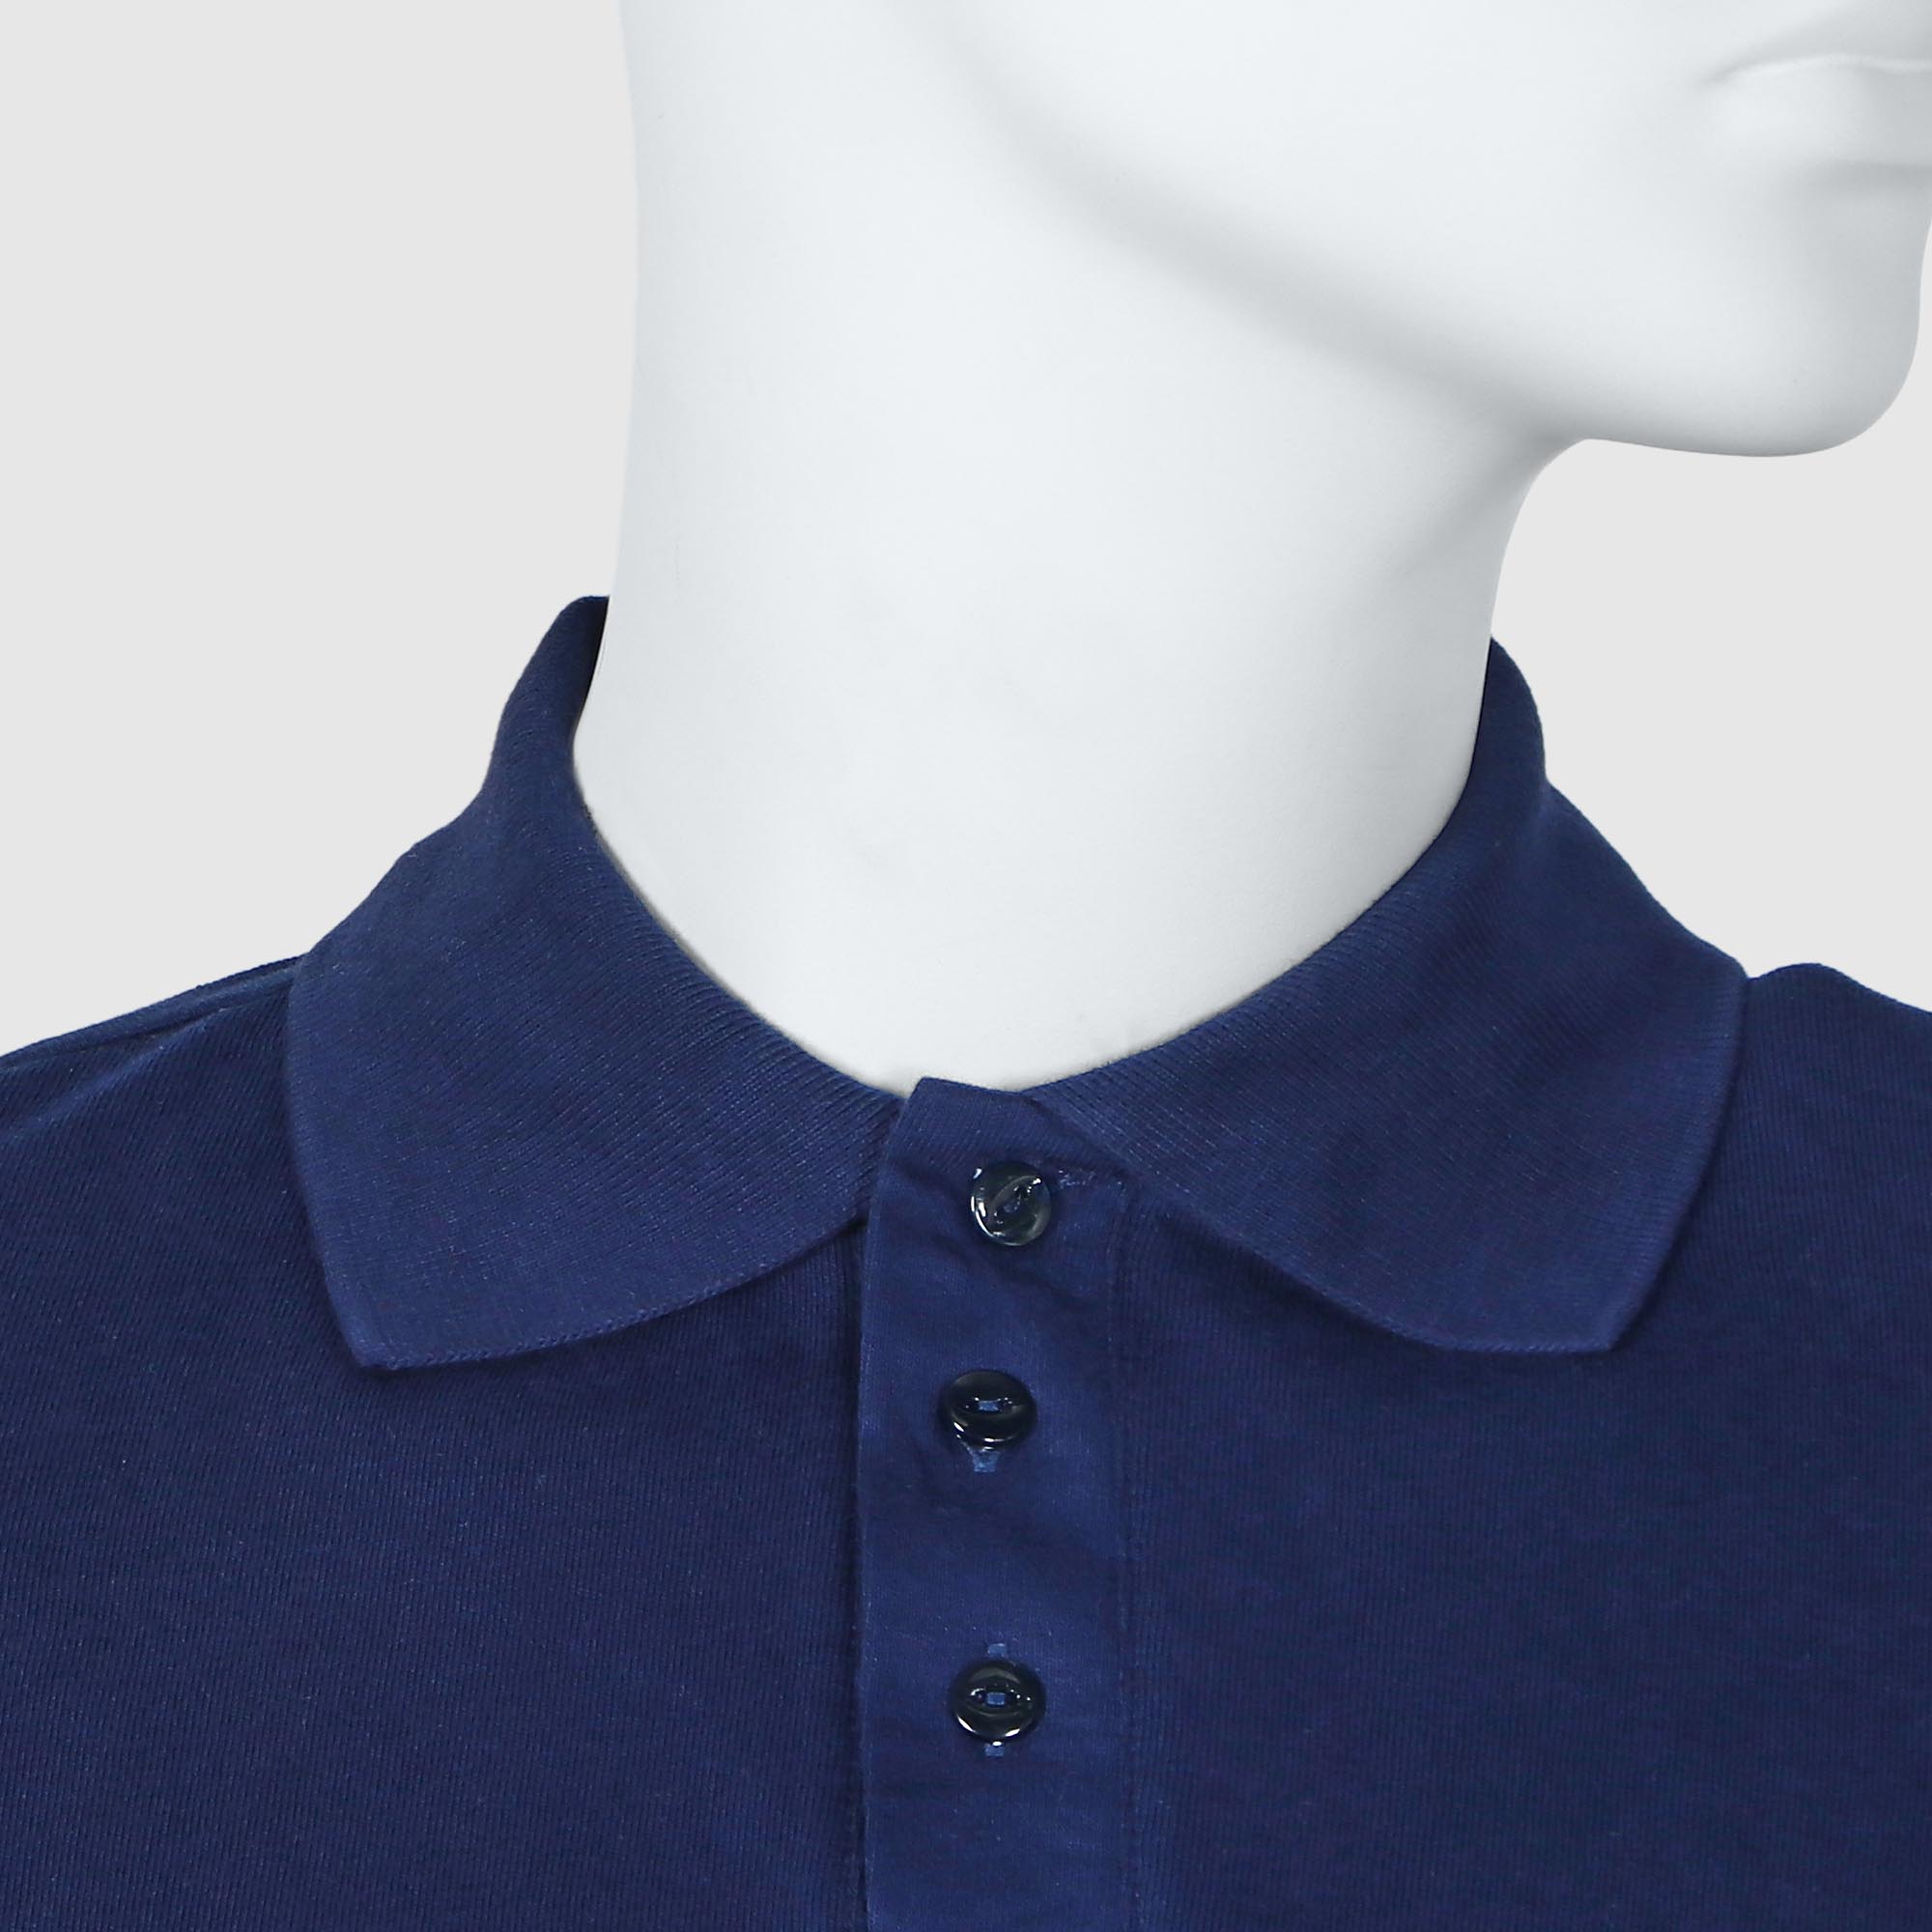 Мужская футболка-поло Diva Teks синяя (DTD-10), цвет синий, размер 54-56 - фото 4